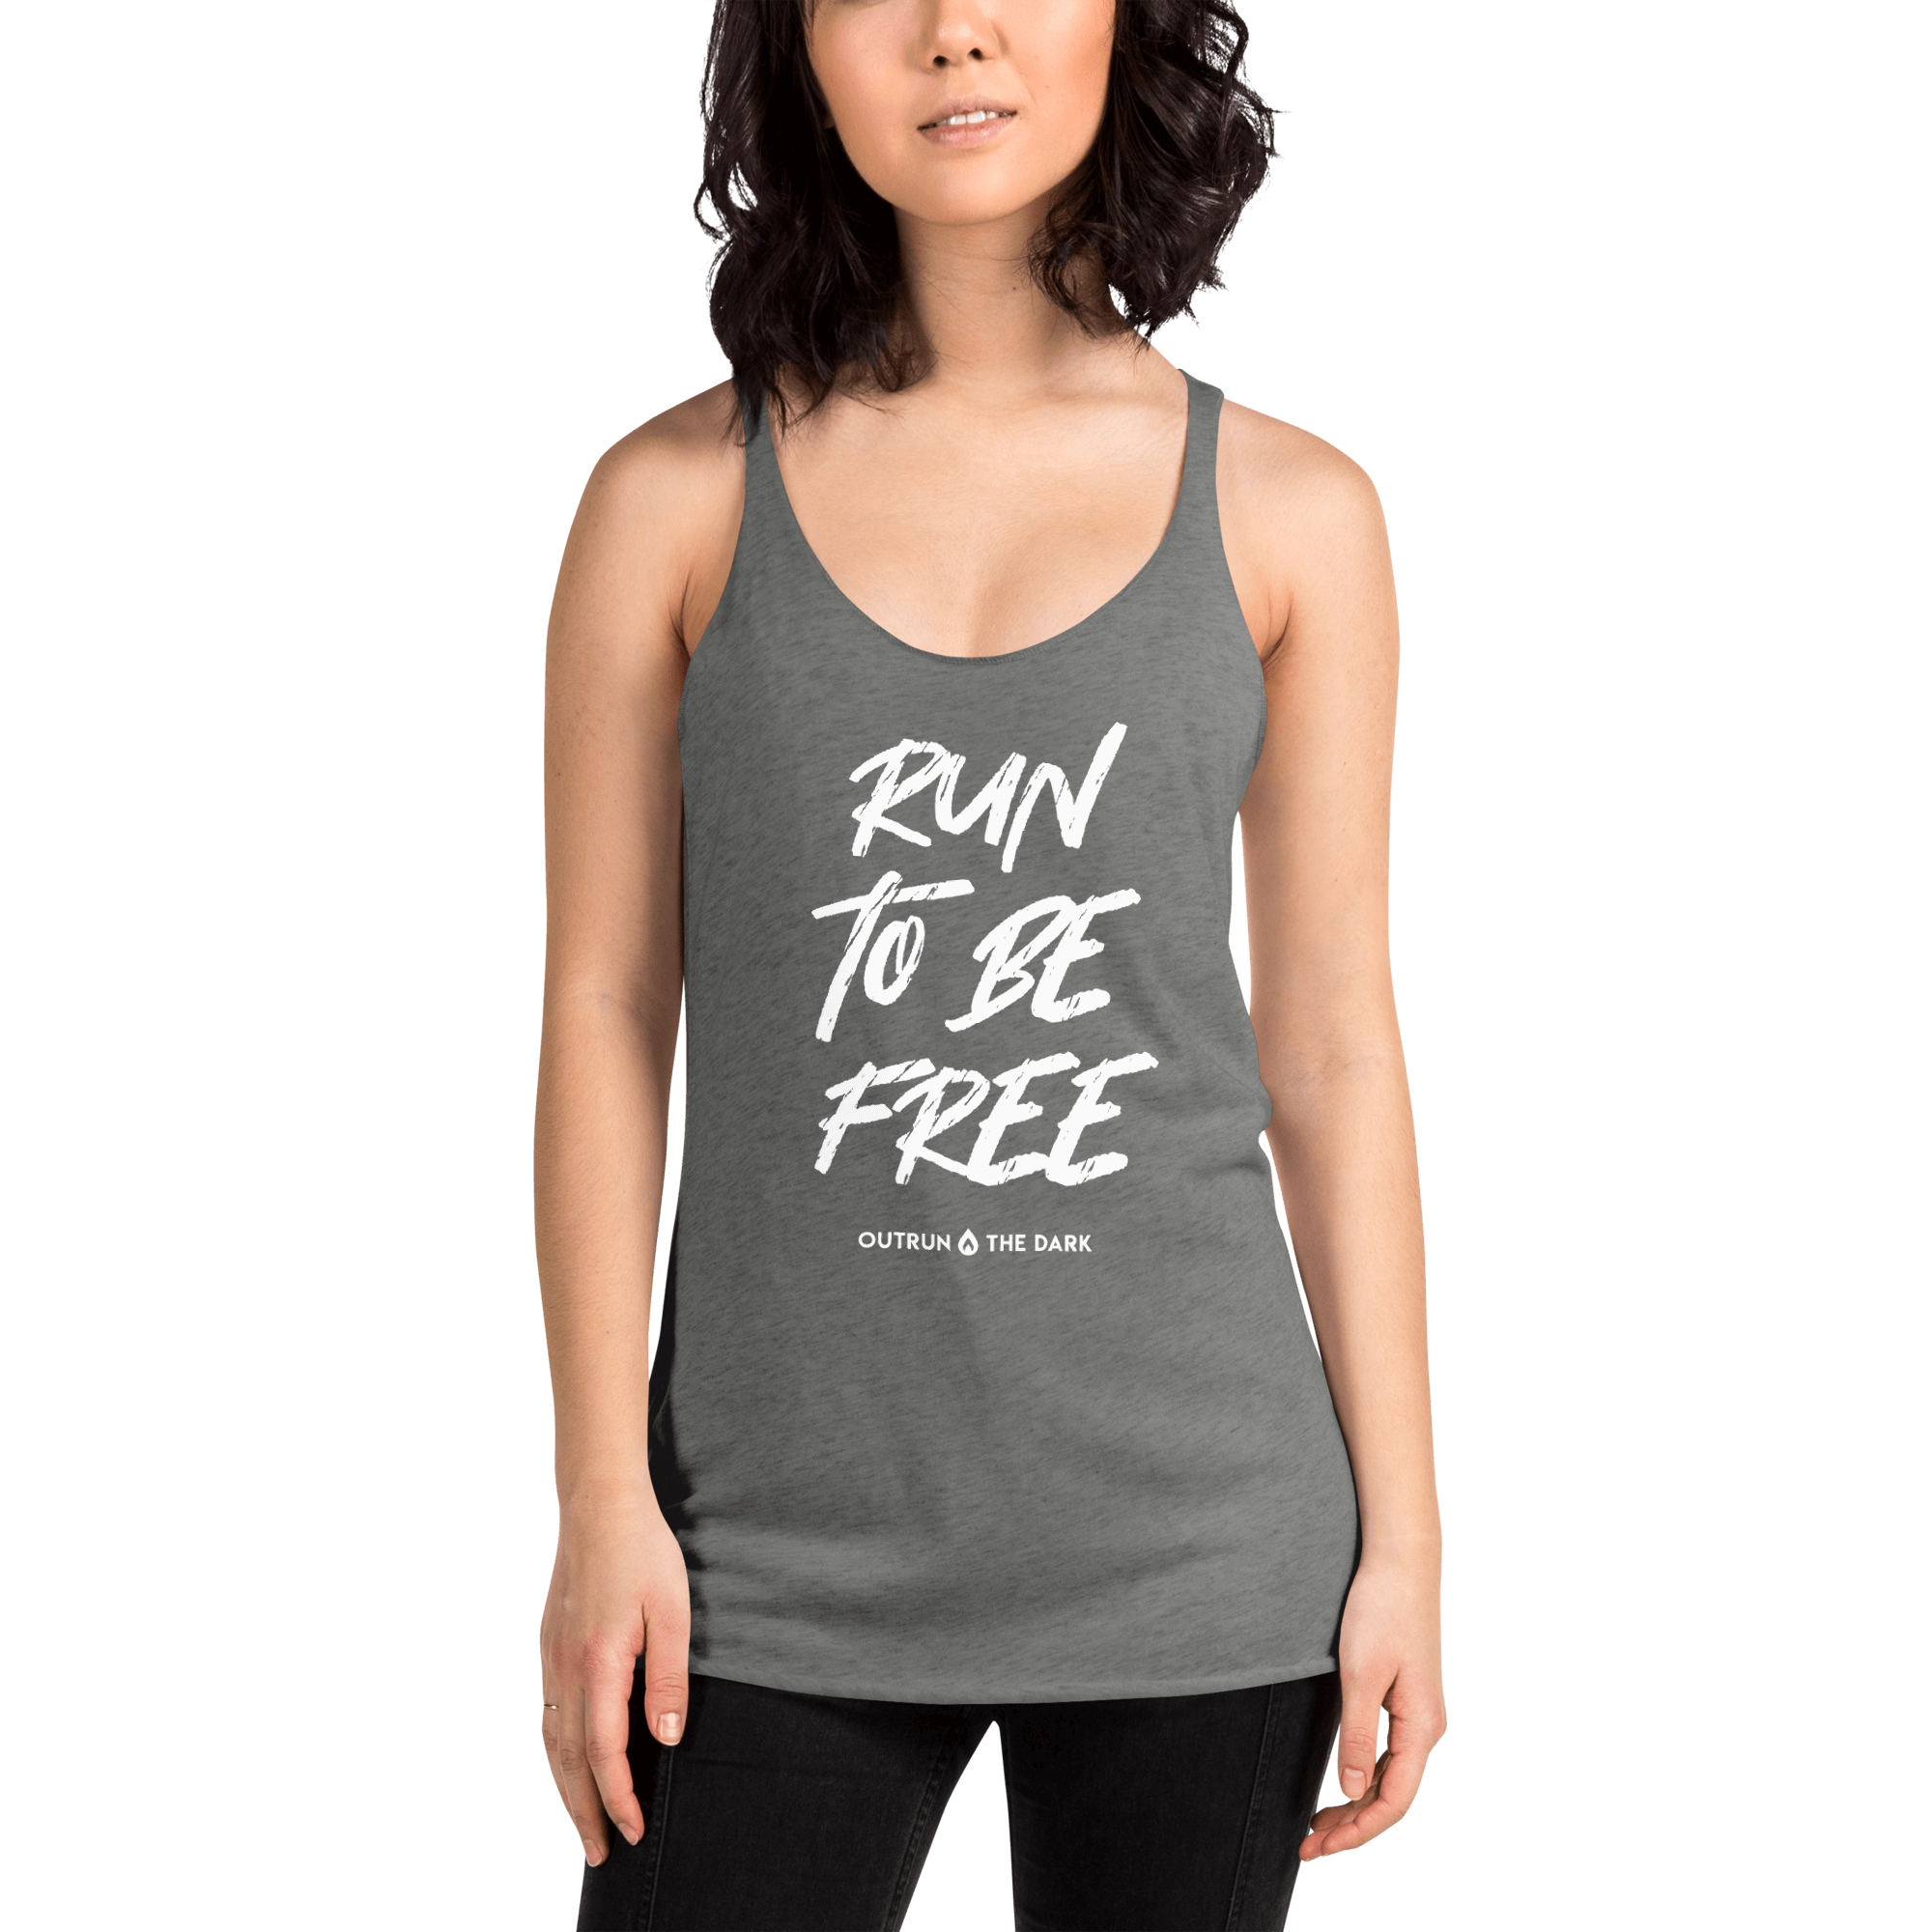 Run to be free Women's Racerback Tank